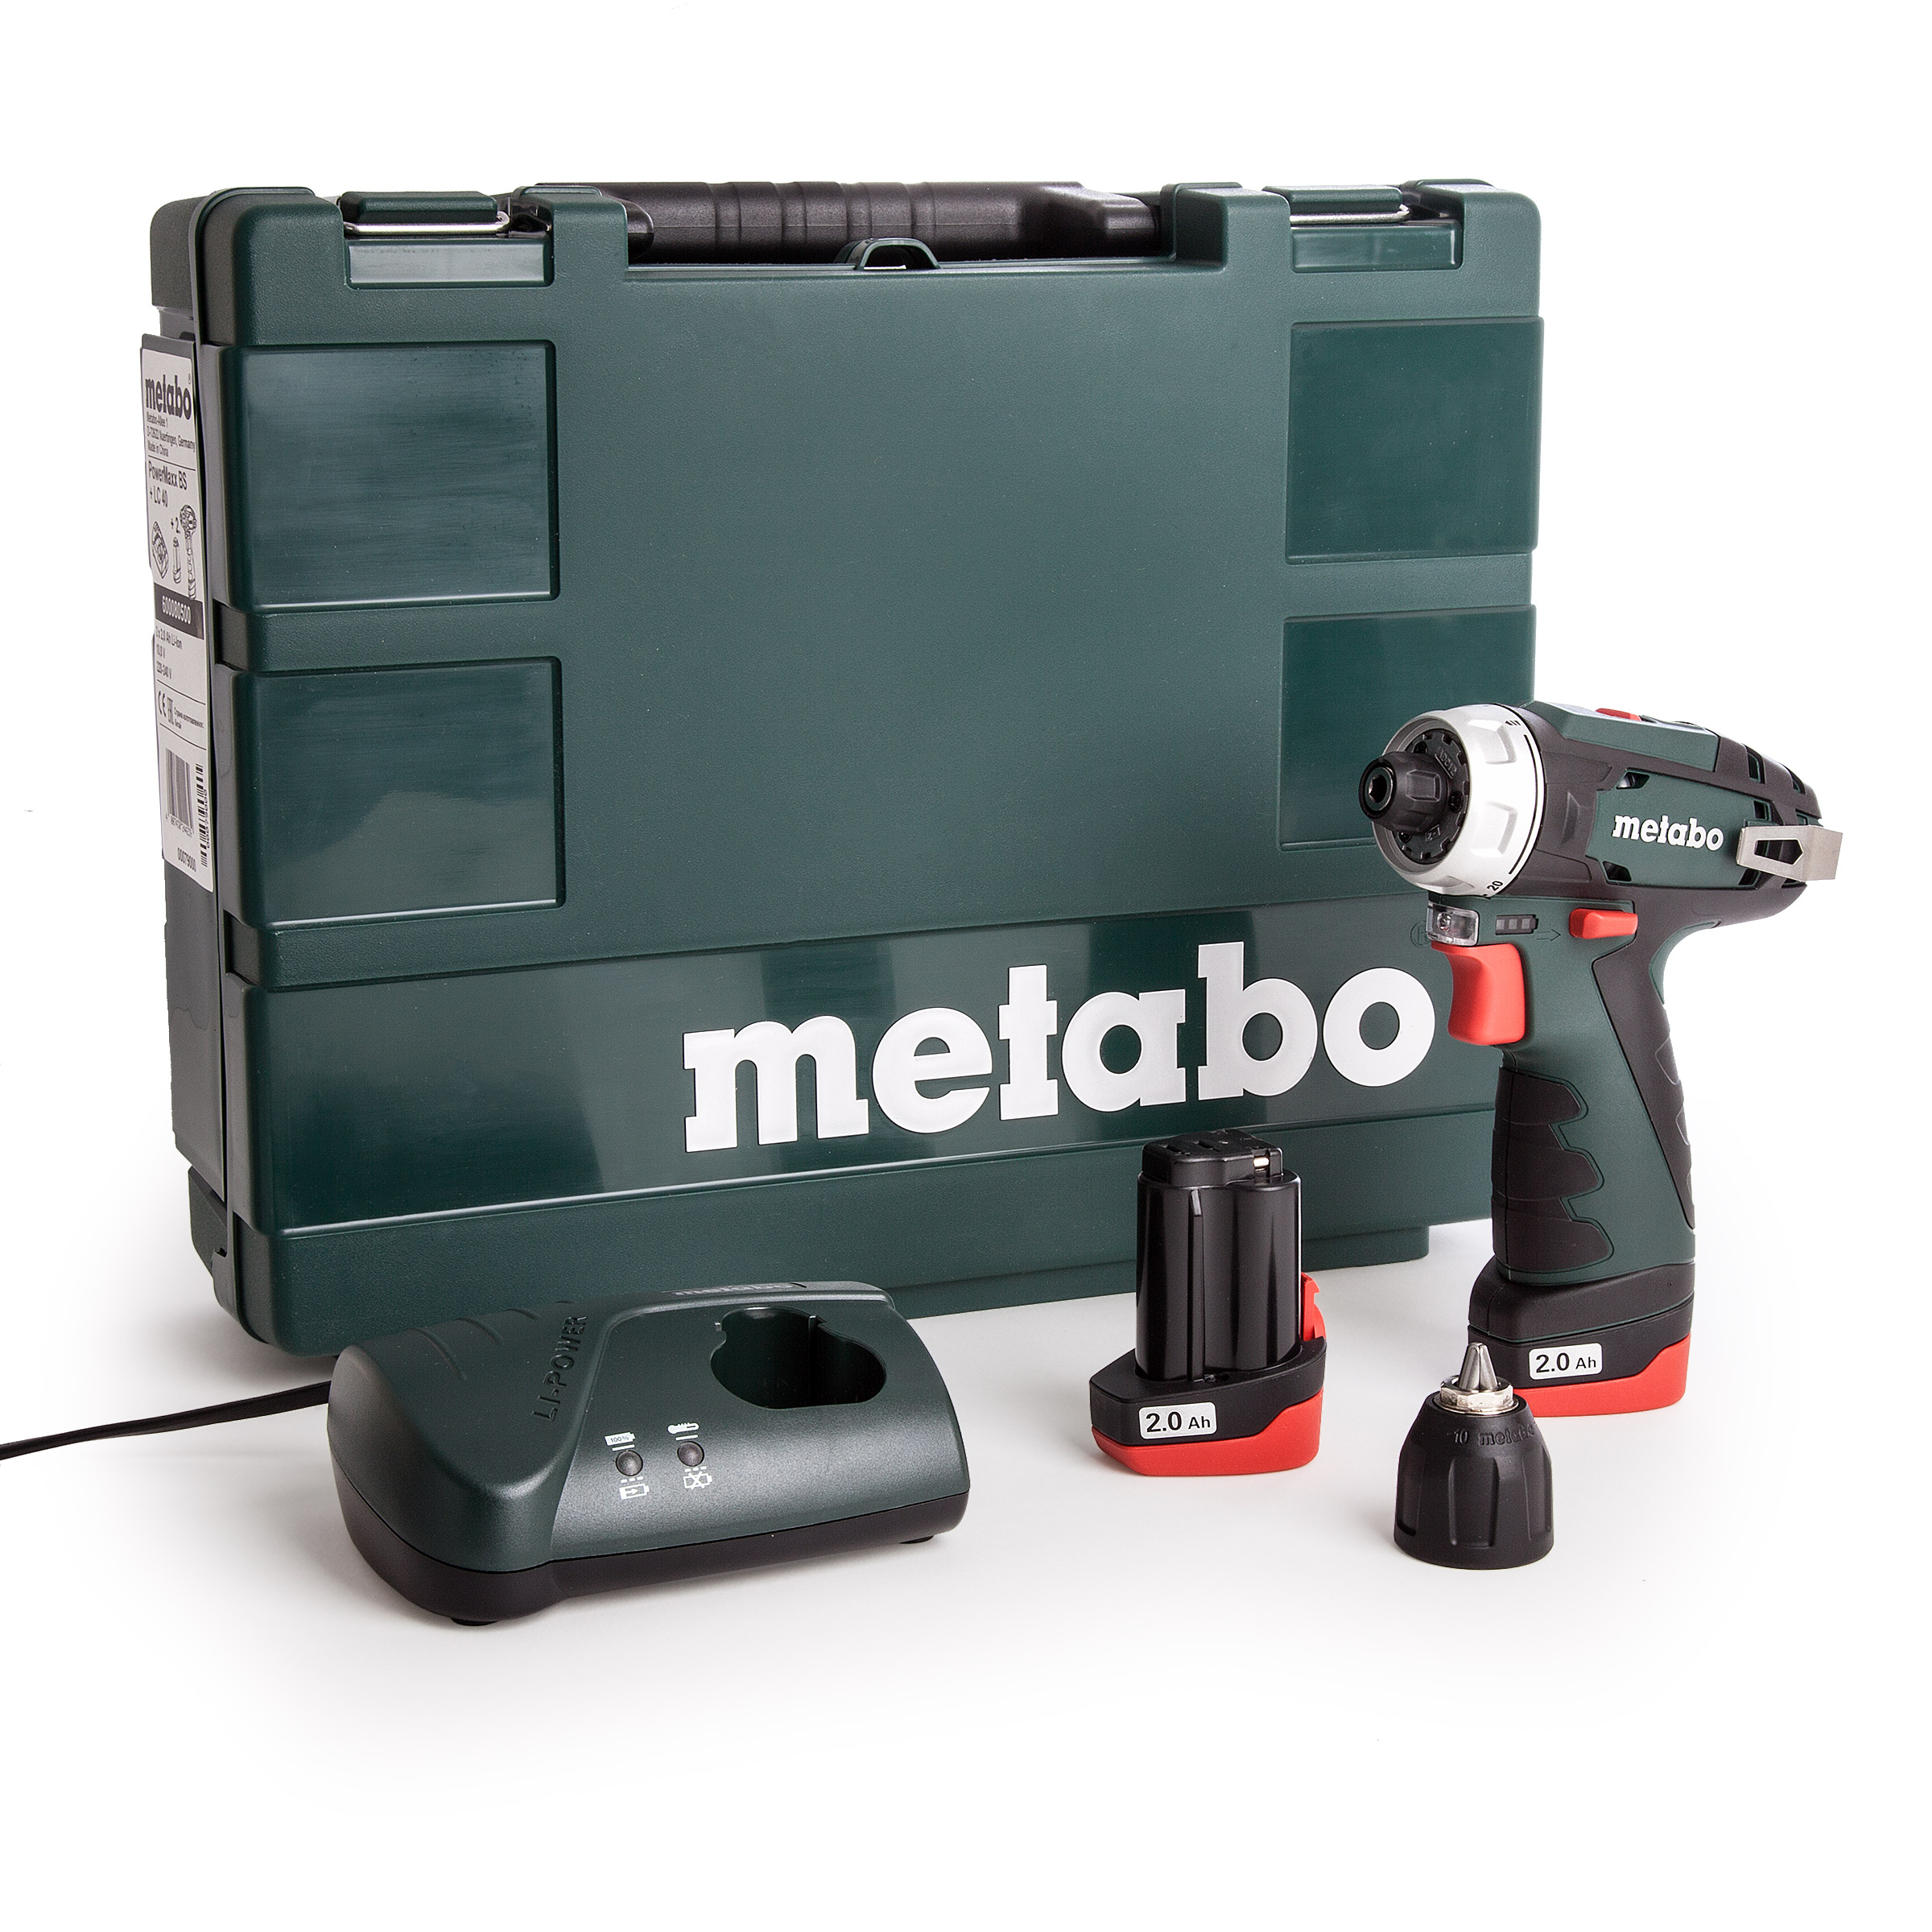 Metabo bs basic 12v. Дрель-шуруповерт Metabo POWERMAXX. Метабо шуруповерт 10.8 POWERMAXX BS. Metabo 600080500. Шуруповерт Metabo 600080500.